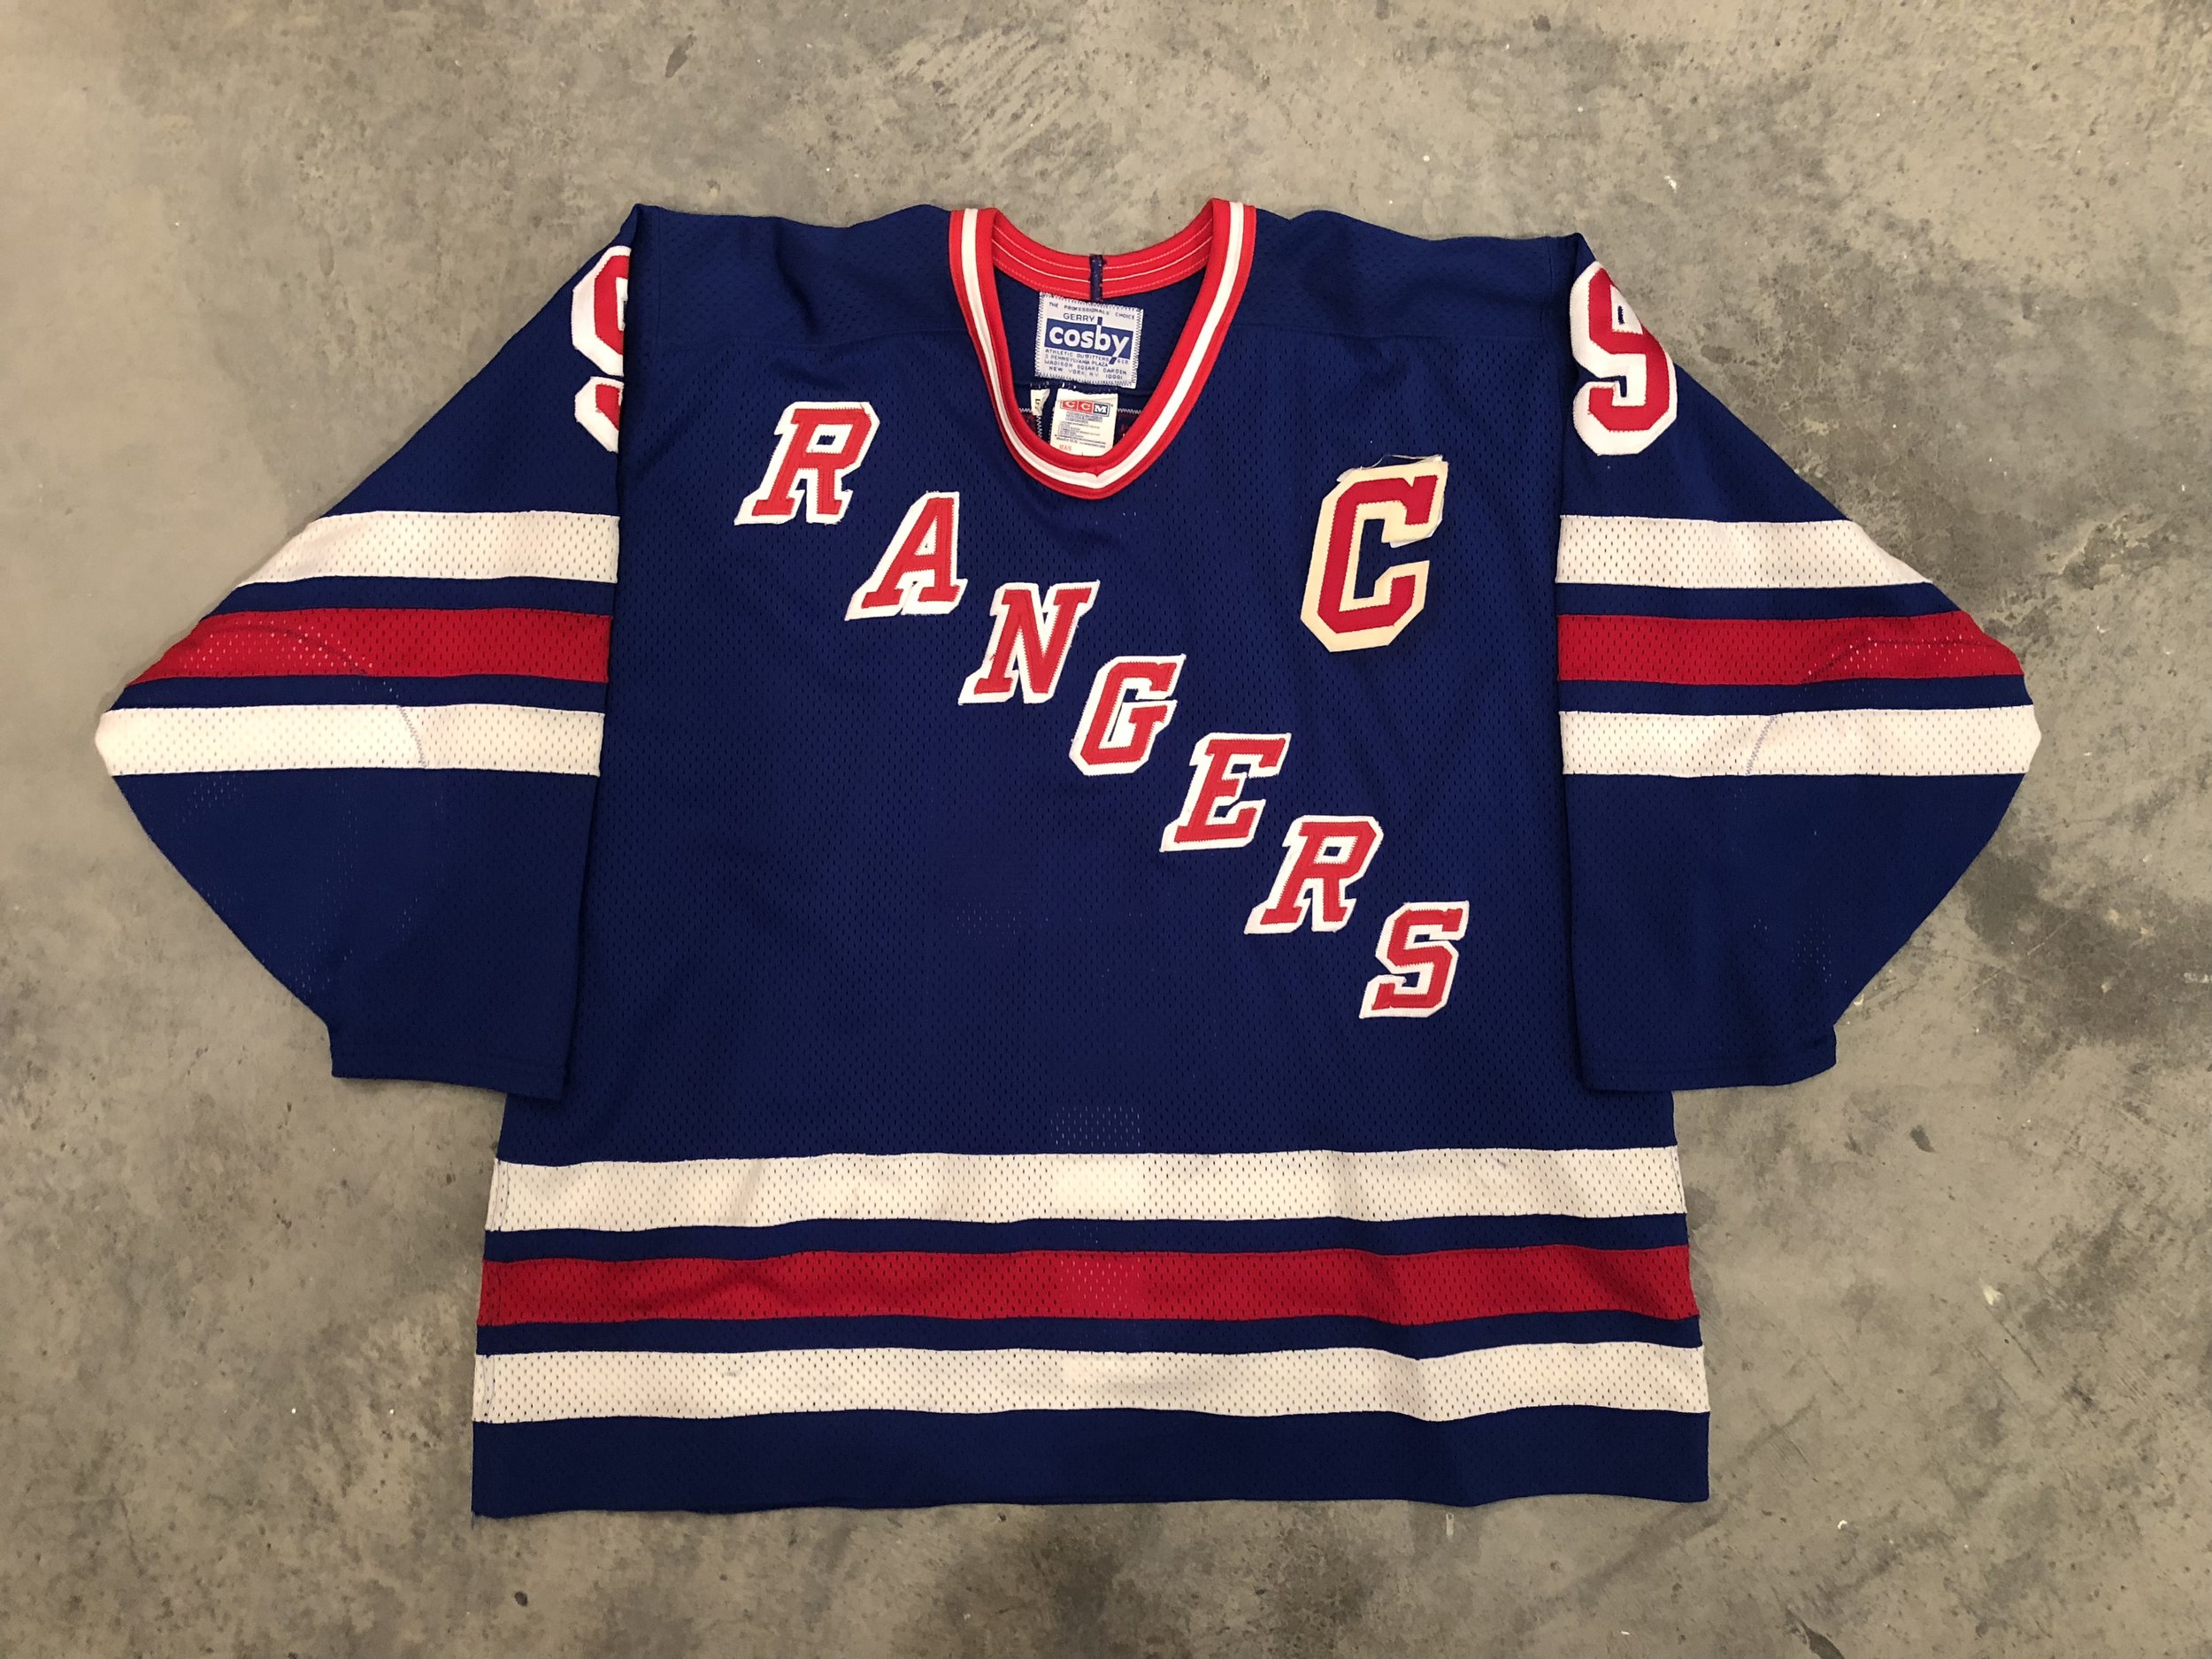 Mike Richter Rangers — Game Worn Goalie Jerseys